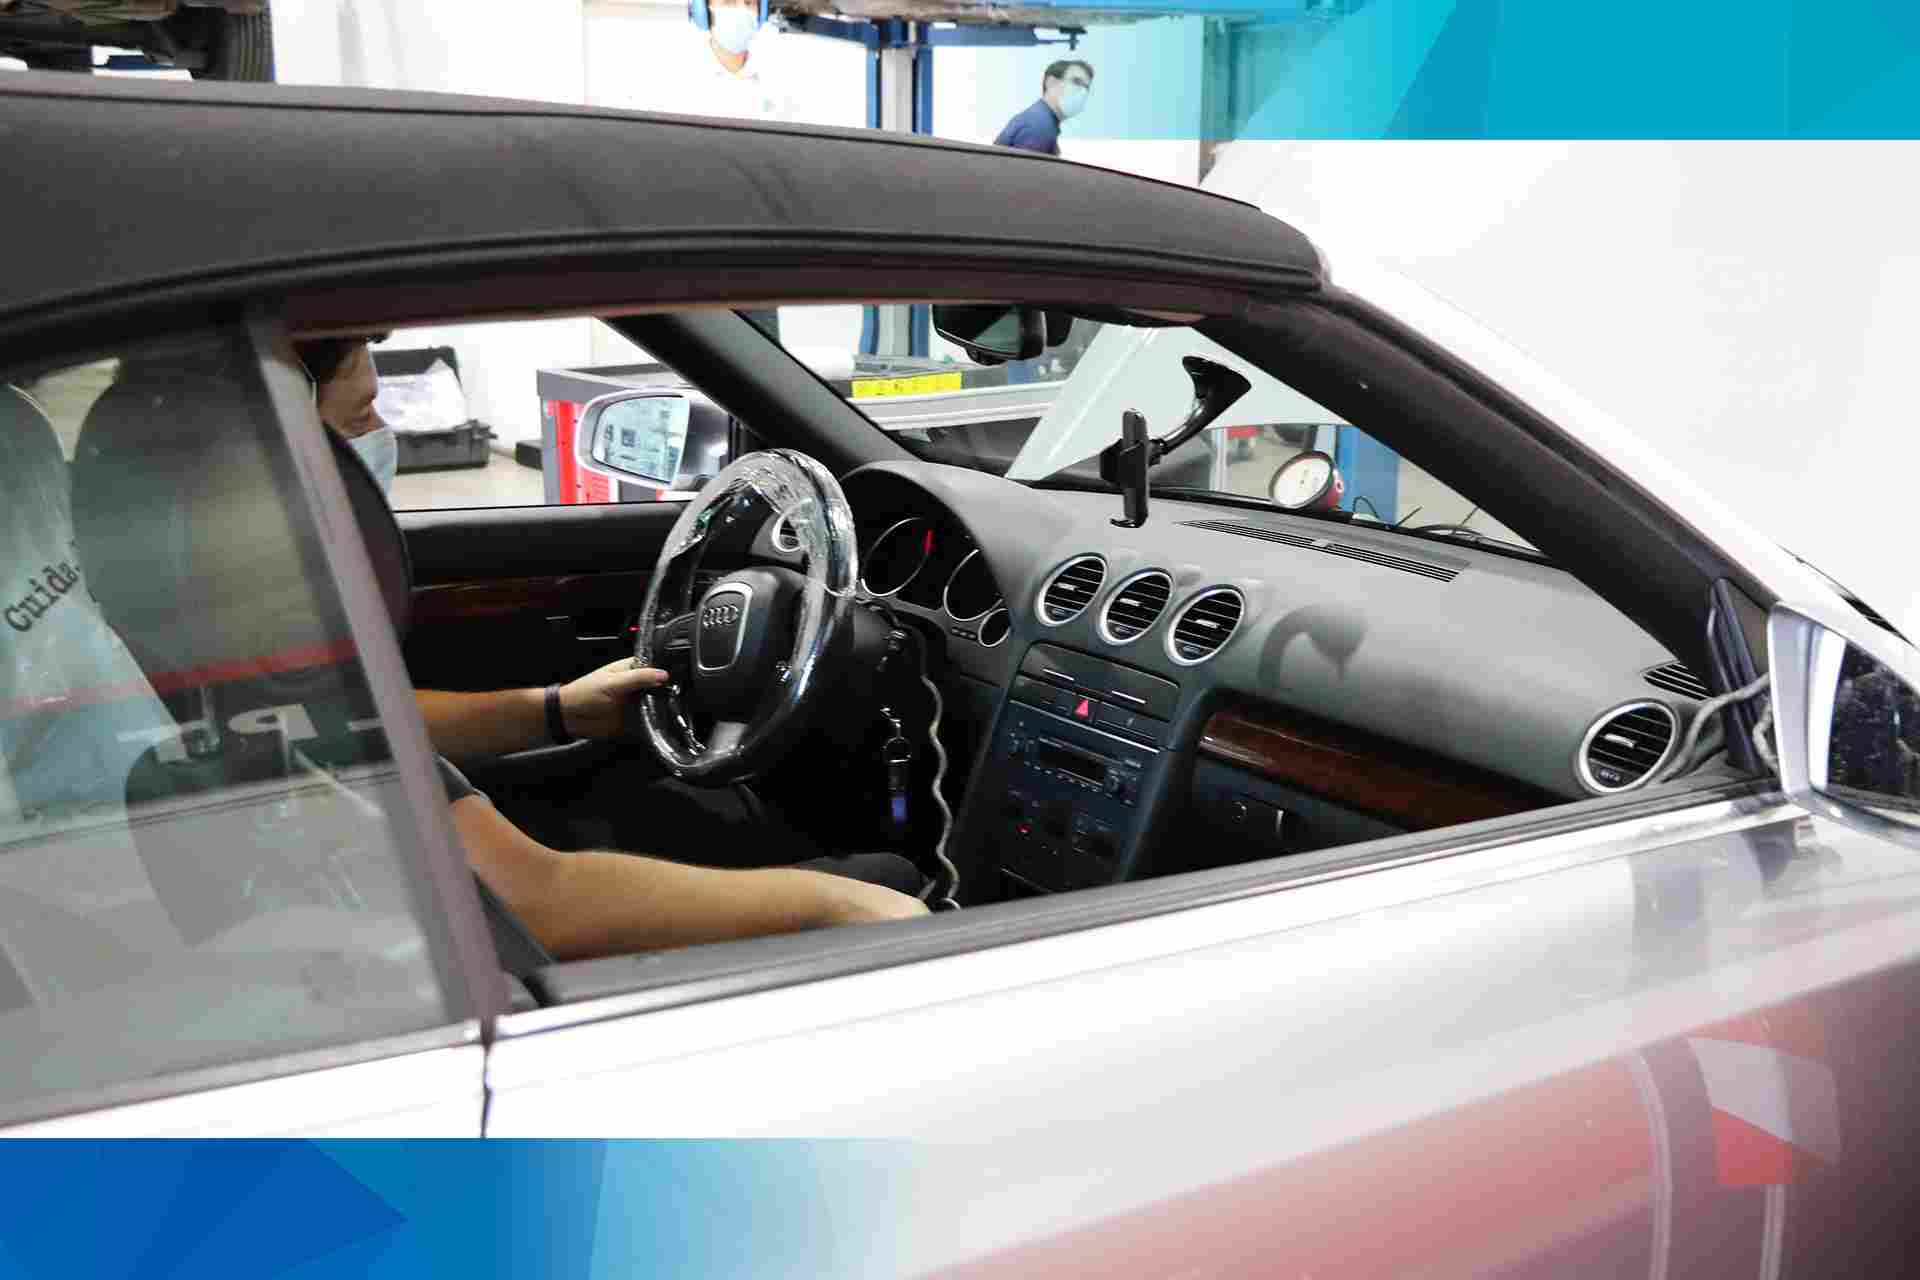 PKE FlexDRIVE - Audi A4 2.0TDI